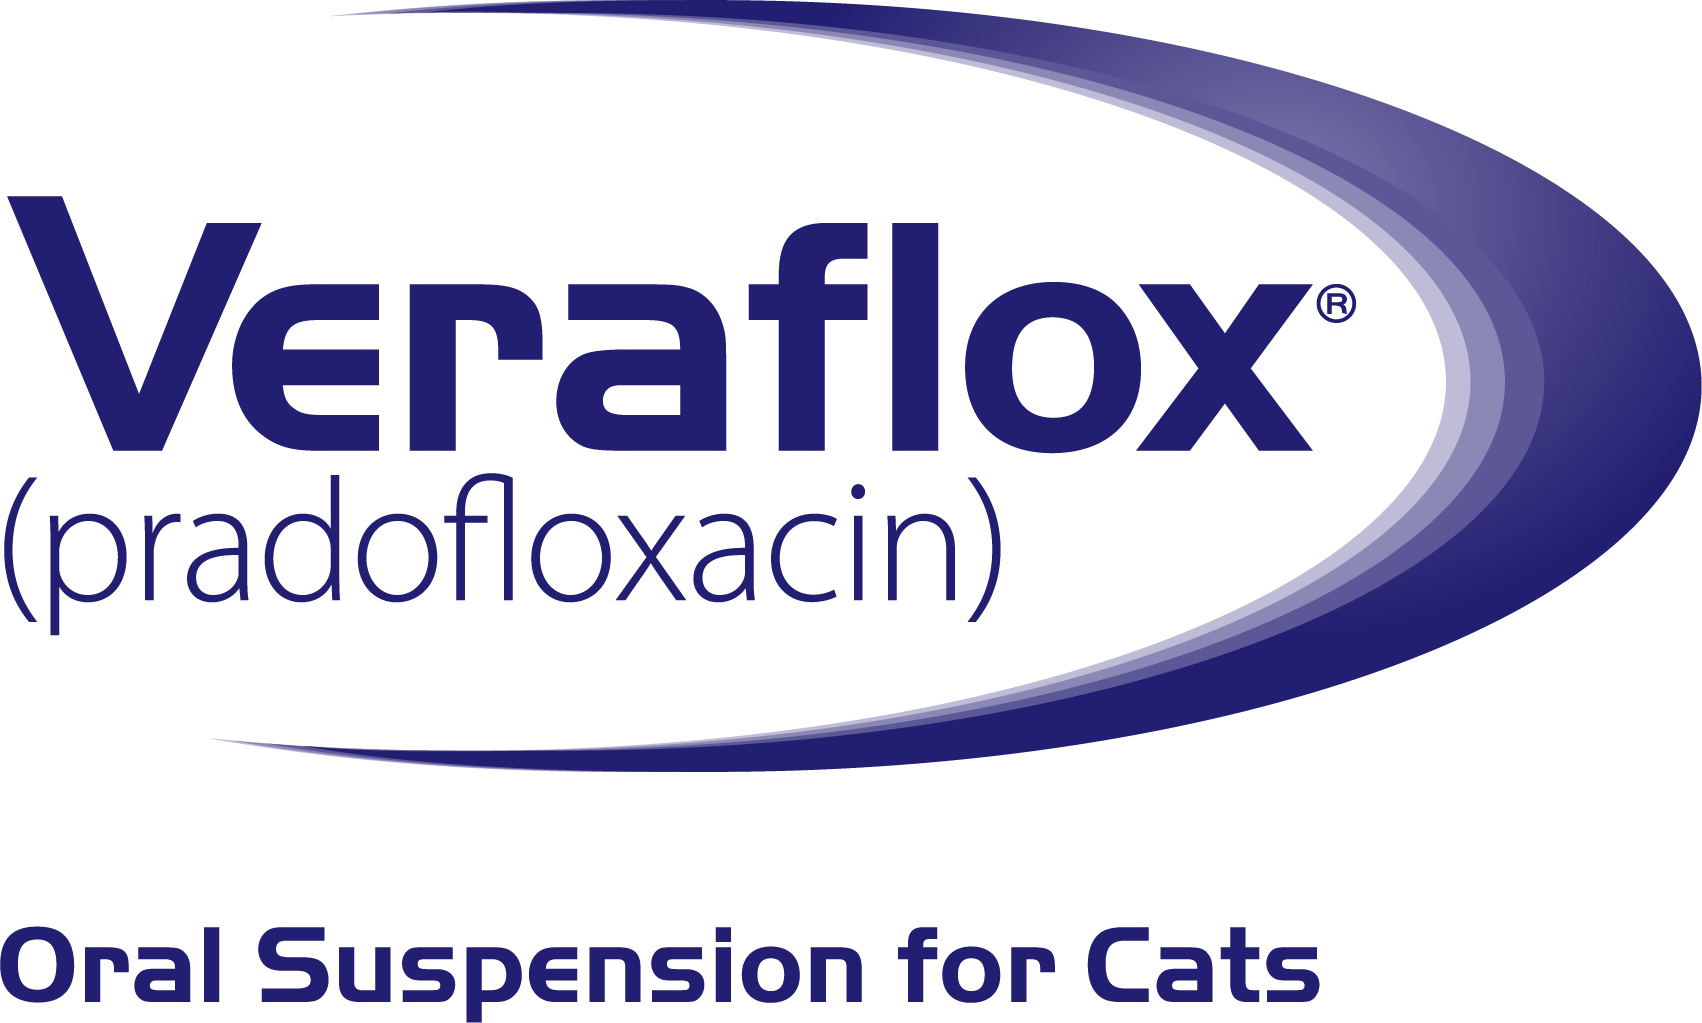 Veraflox (pradofloxacin) Oral Suspension for Cats